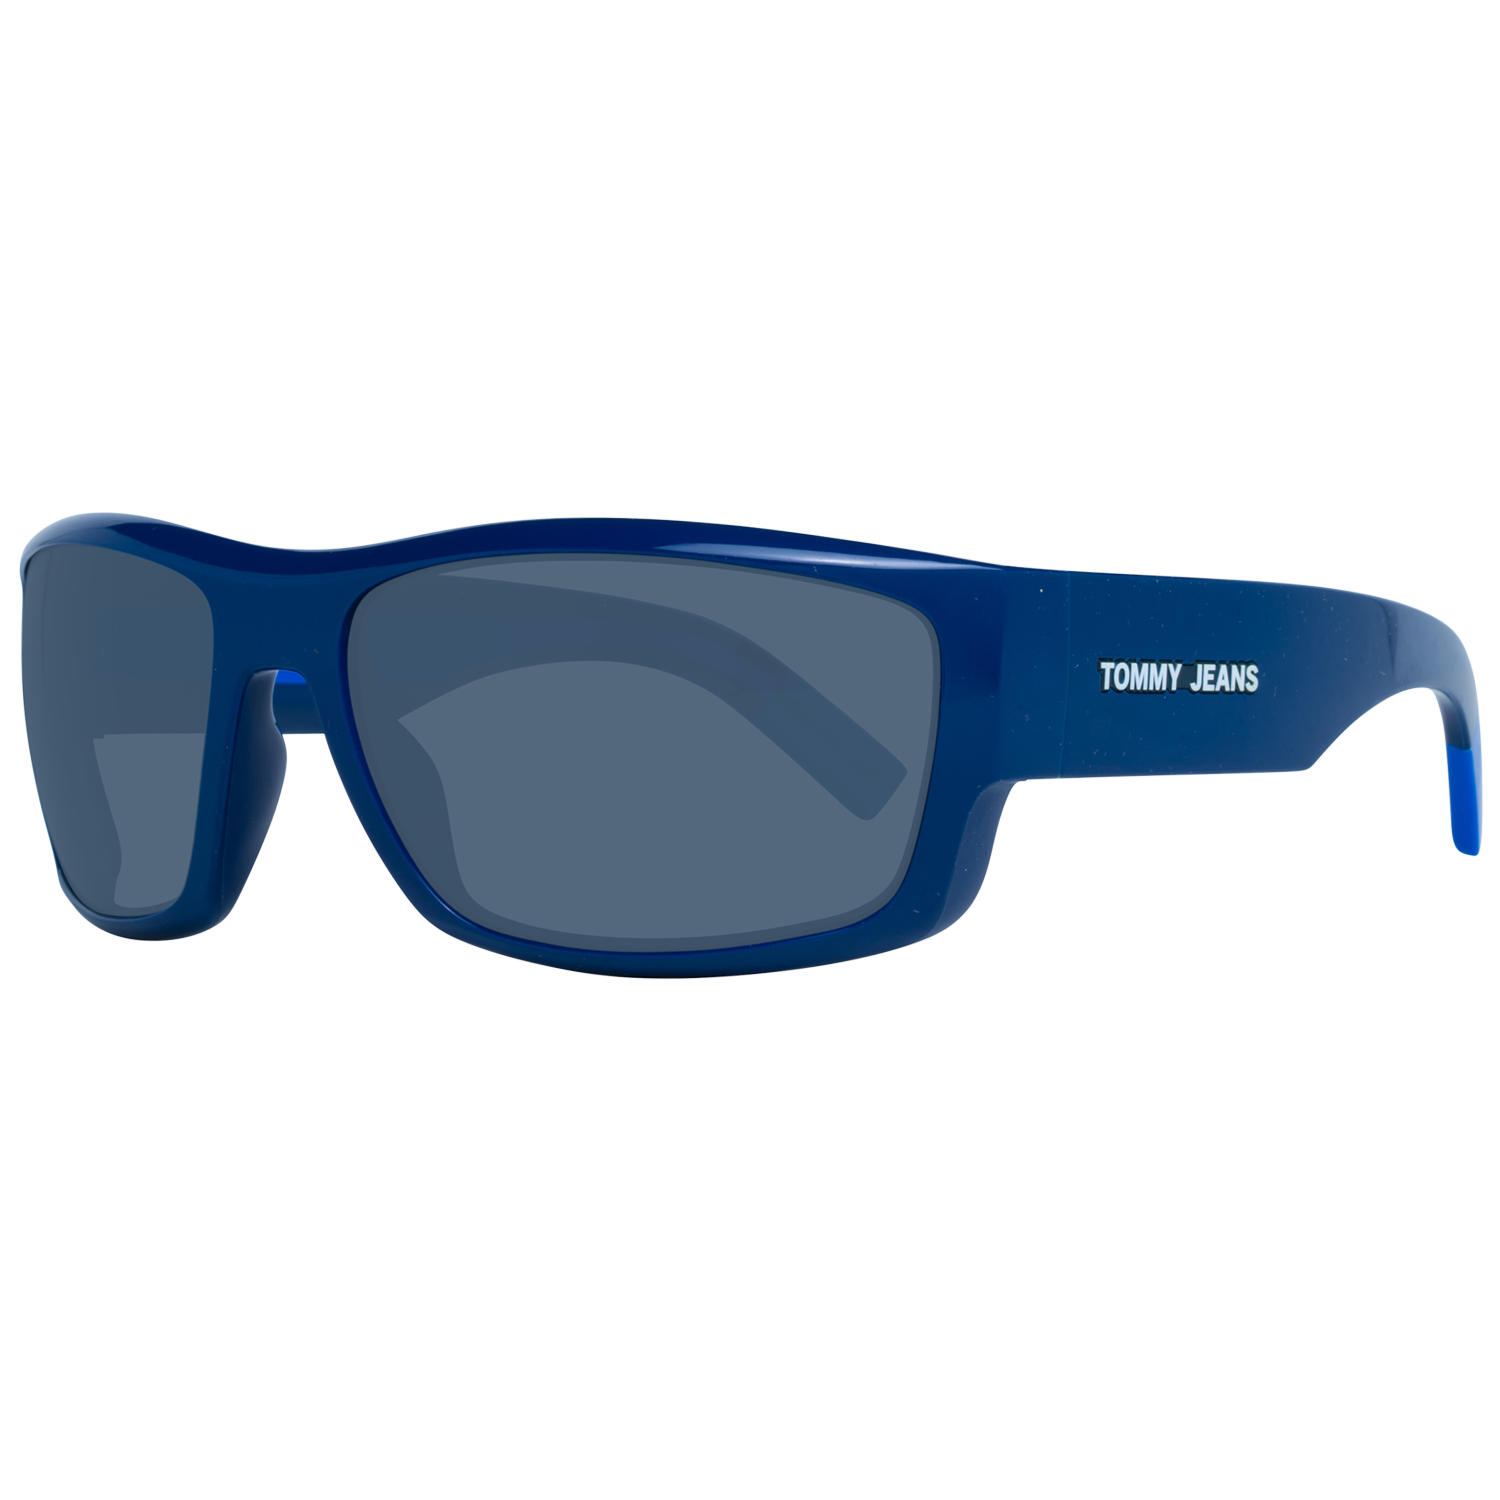 Tommy Hilfiger Sunglasses Tommy Hilfiger Sunglasses TJ 0063/S PJP 62 Eyeglasses Eyewear UK USA Australia 